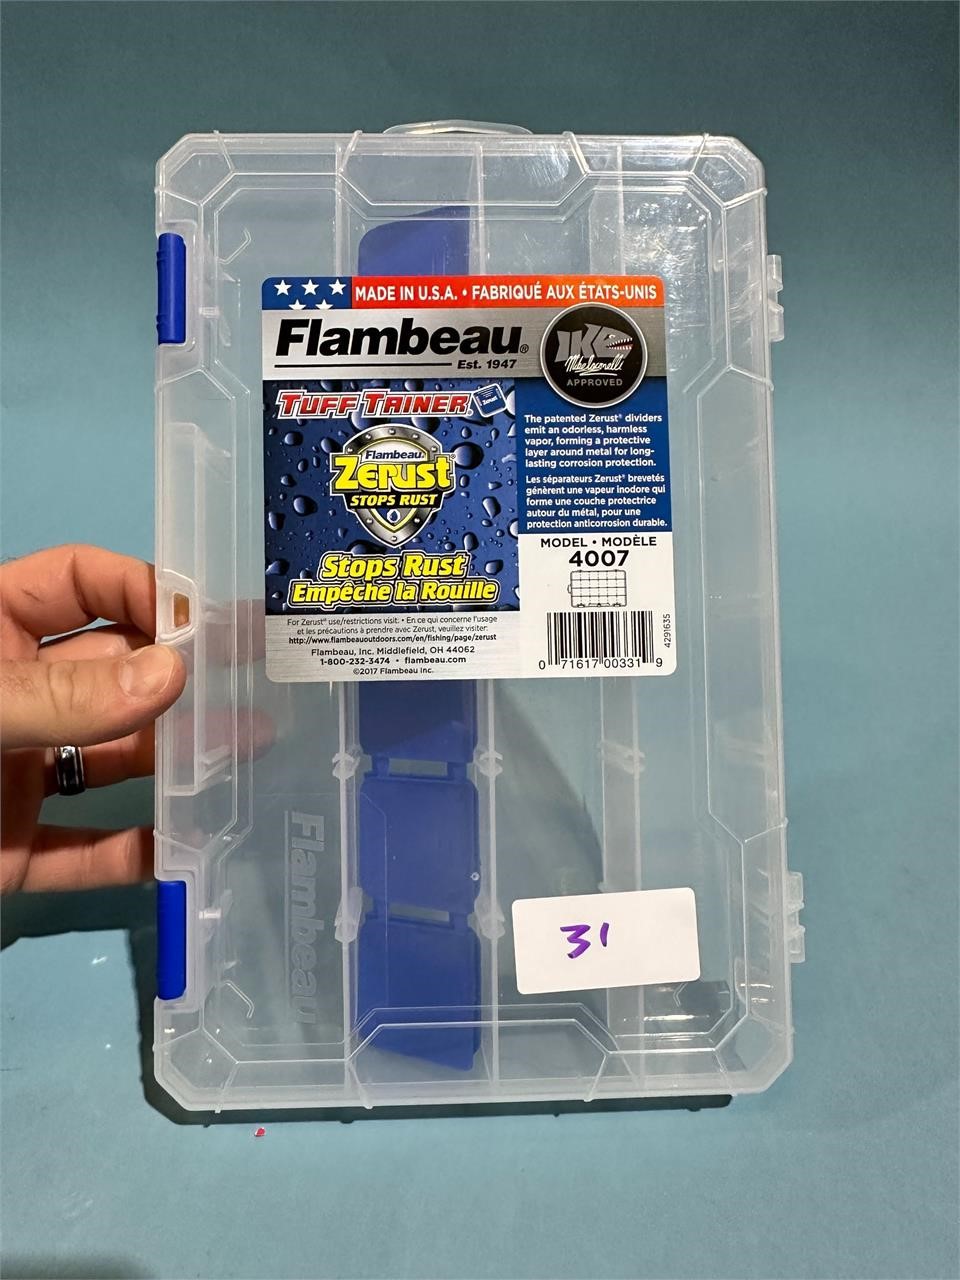 New Flambeau tackle box